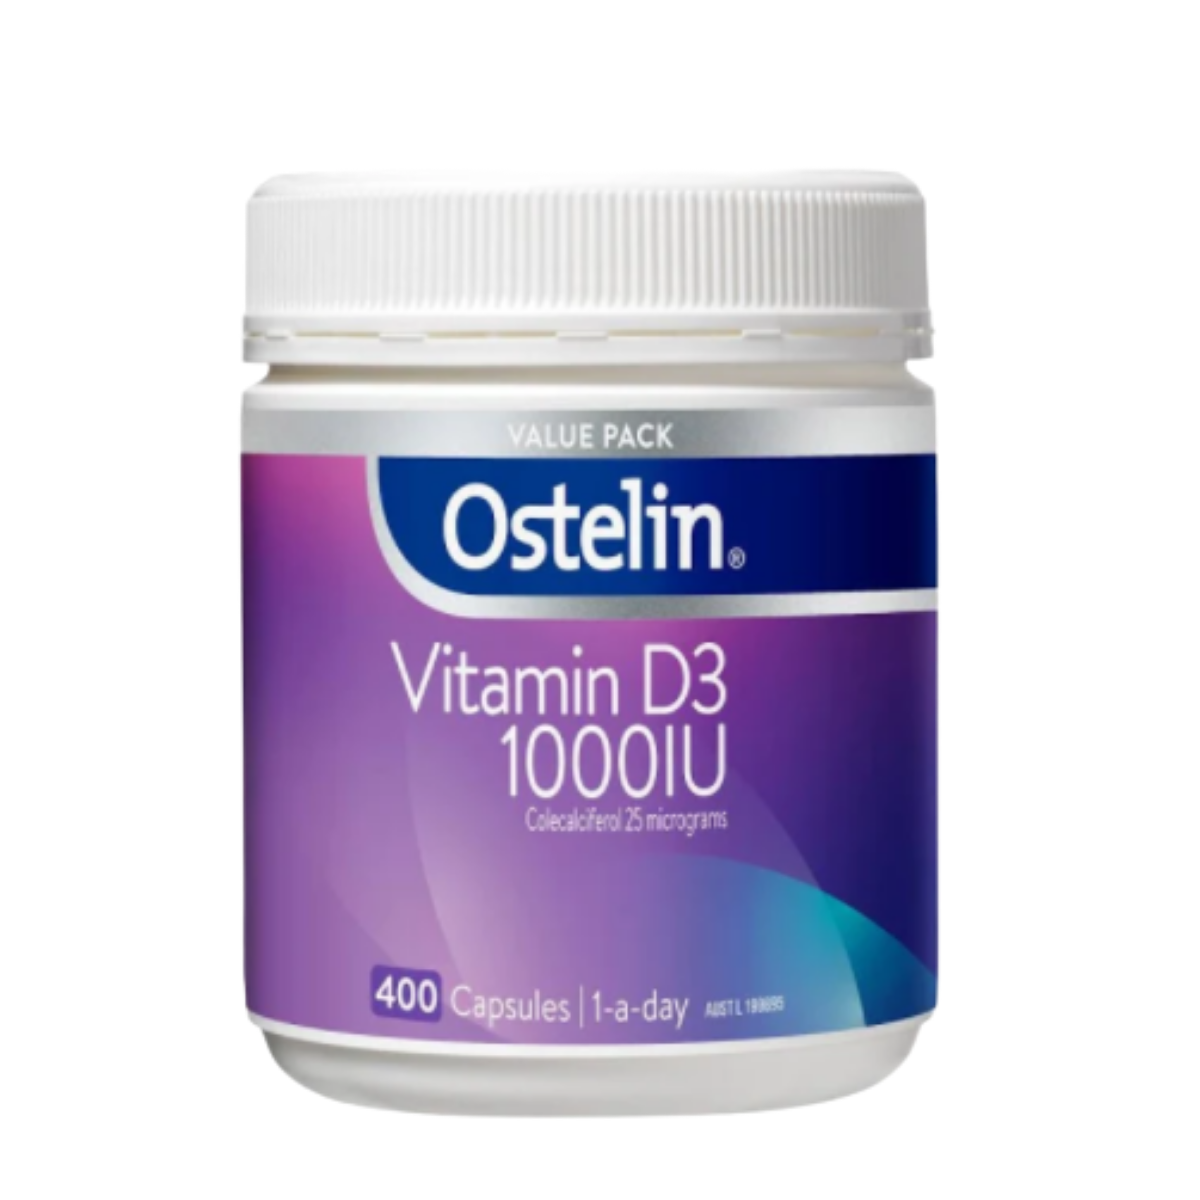 Ostelin Vitamin D3 1000IU Vitamin D 400 Capsules Value Size